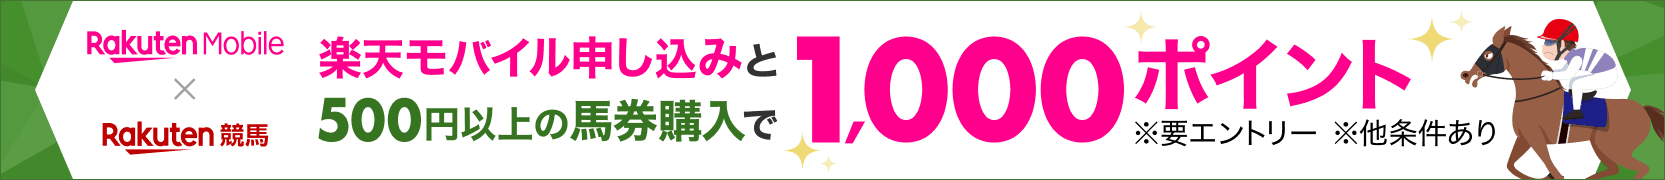 「Rakuten UN-LIMIT VII」のオンラインお申し込み&楽天競馬で合計500円以上の馬券購入で1,000ポイントプレゼントキャンペーン